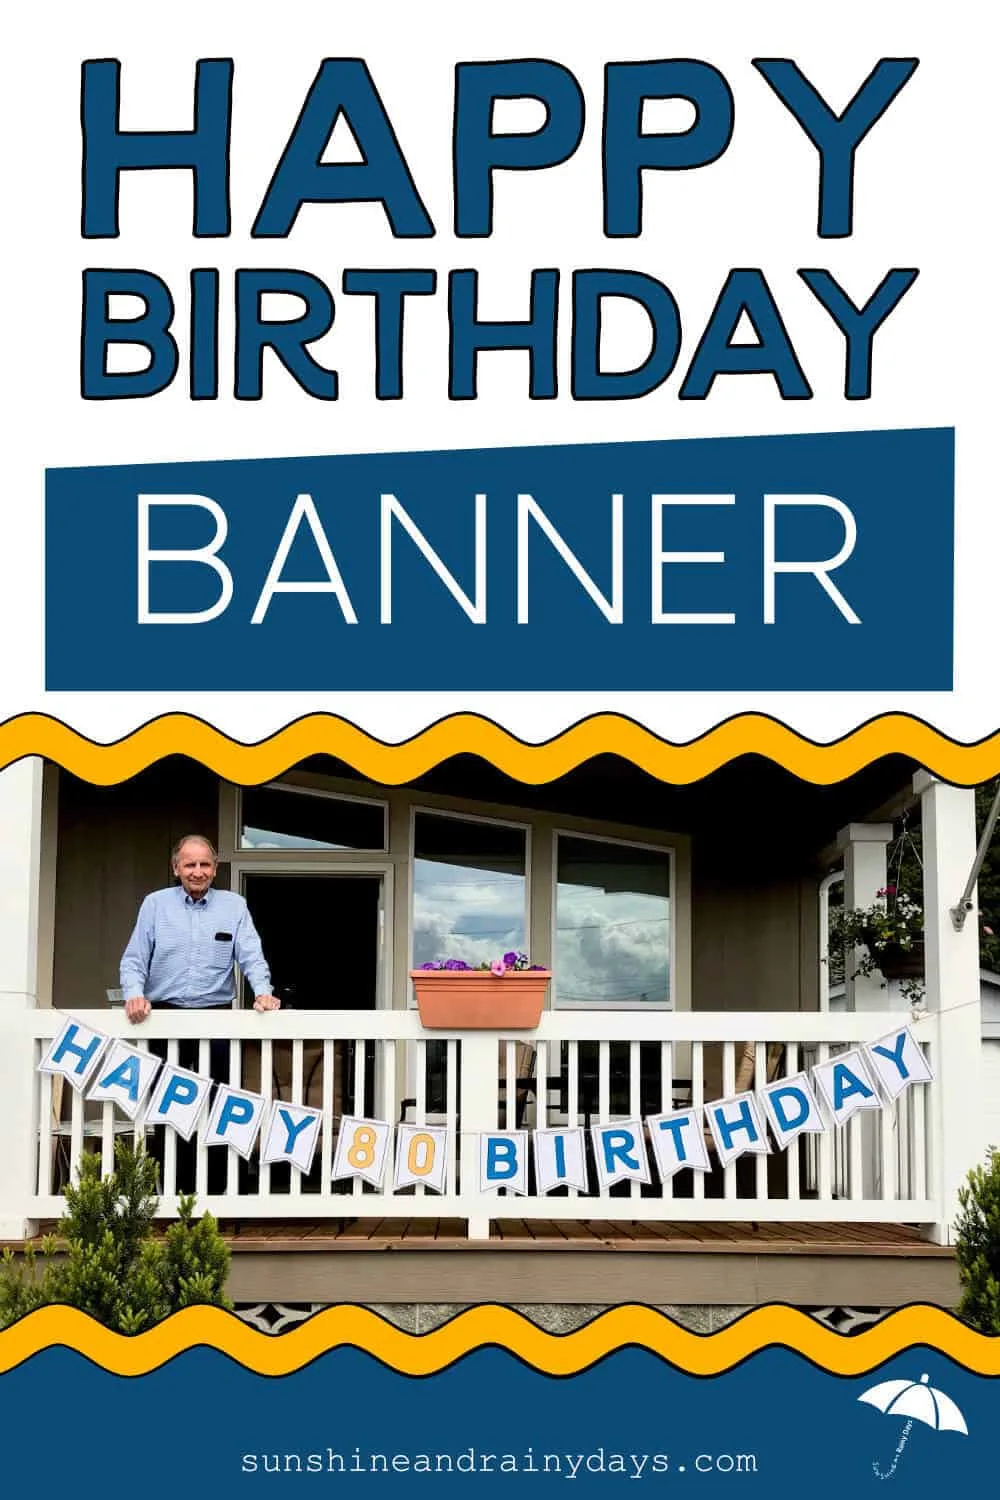 Happy Birthday Banner Hung On Porch